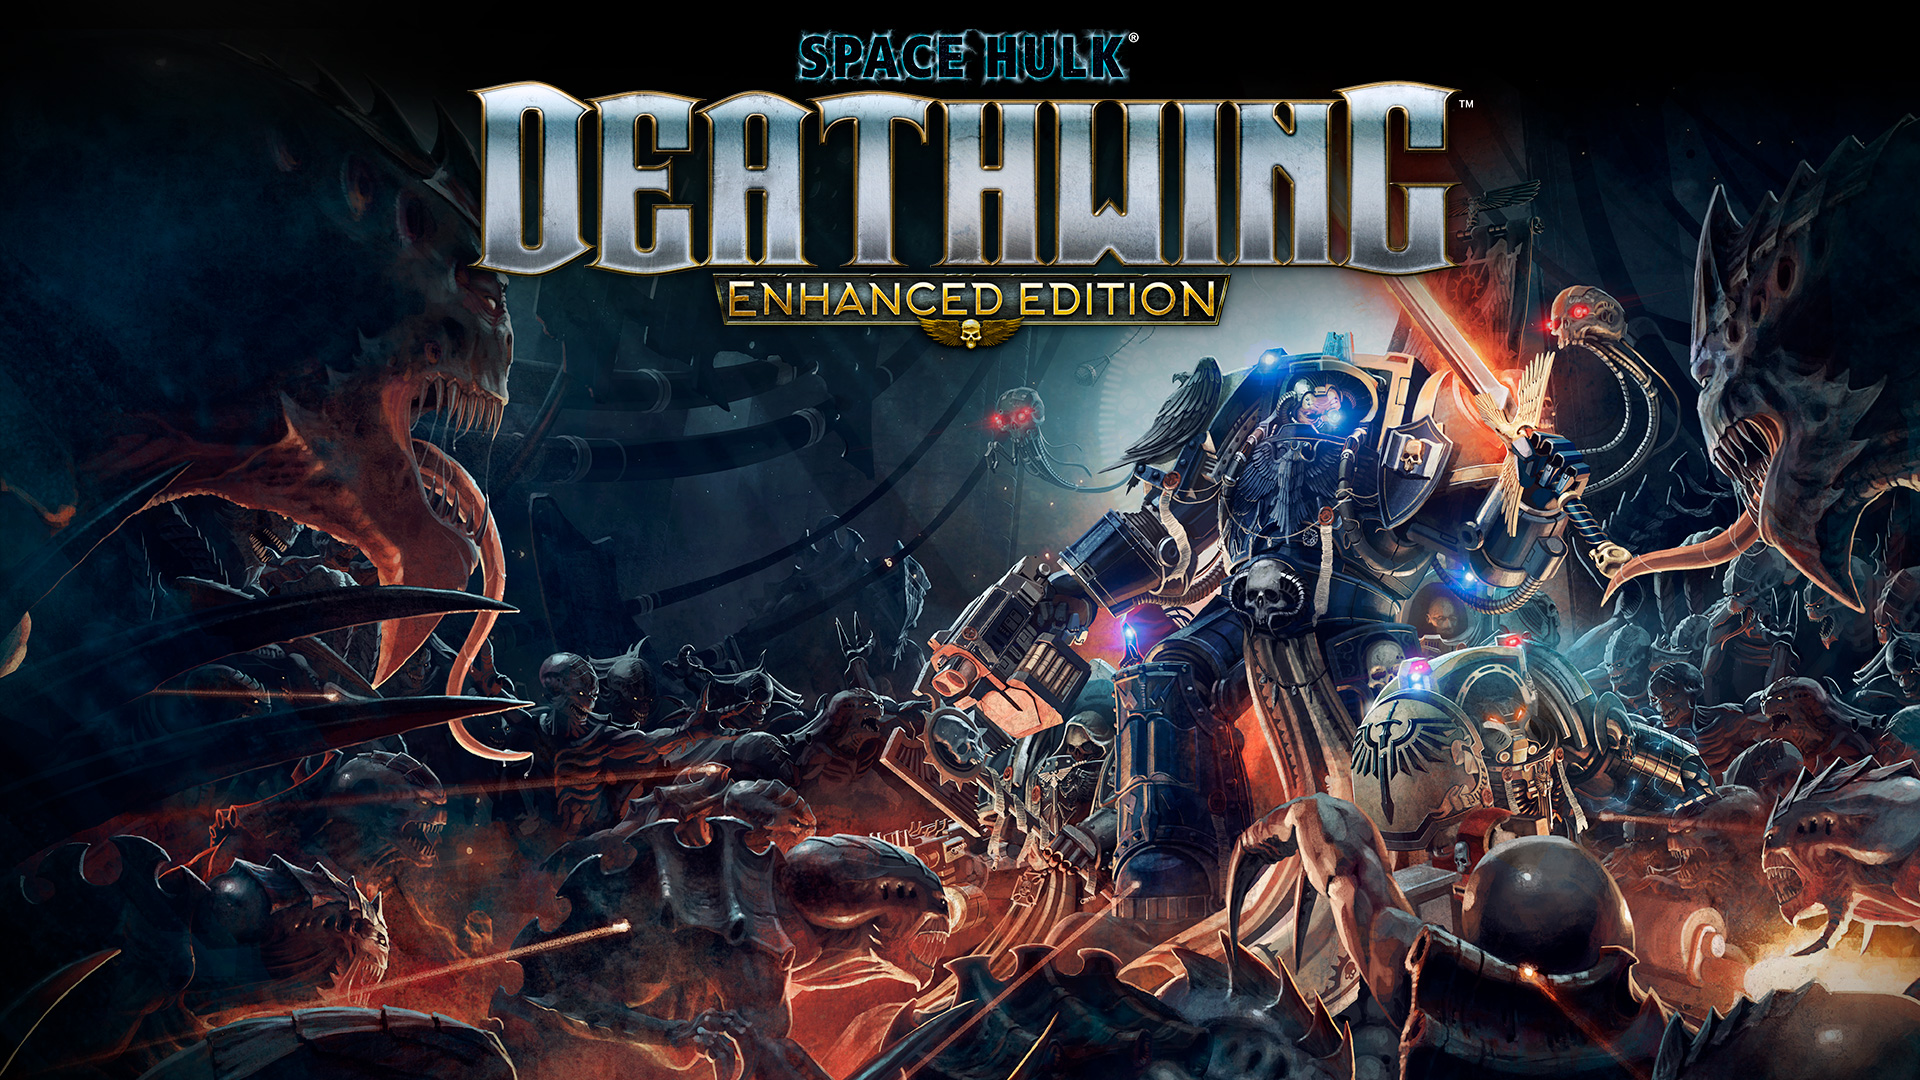 Spacehulk_deathwing Enhance_edition Artwork_logo